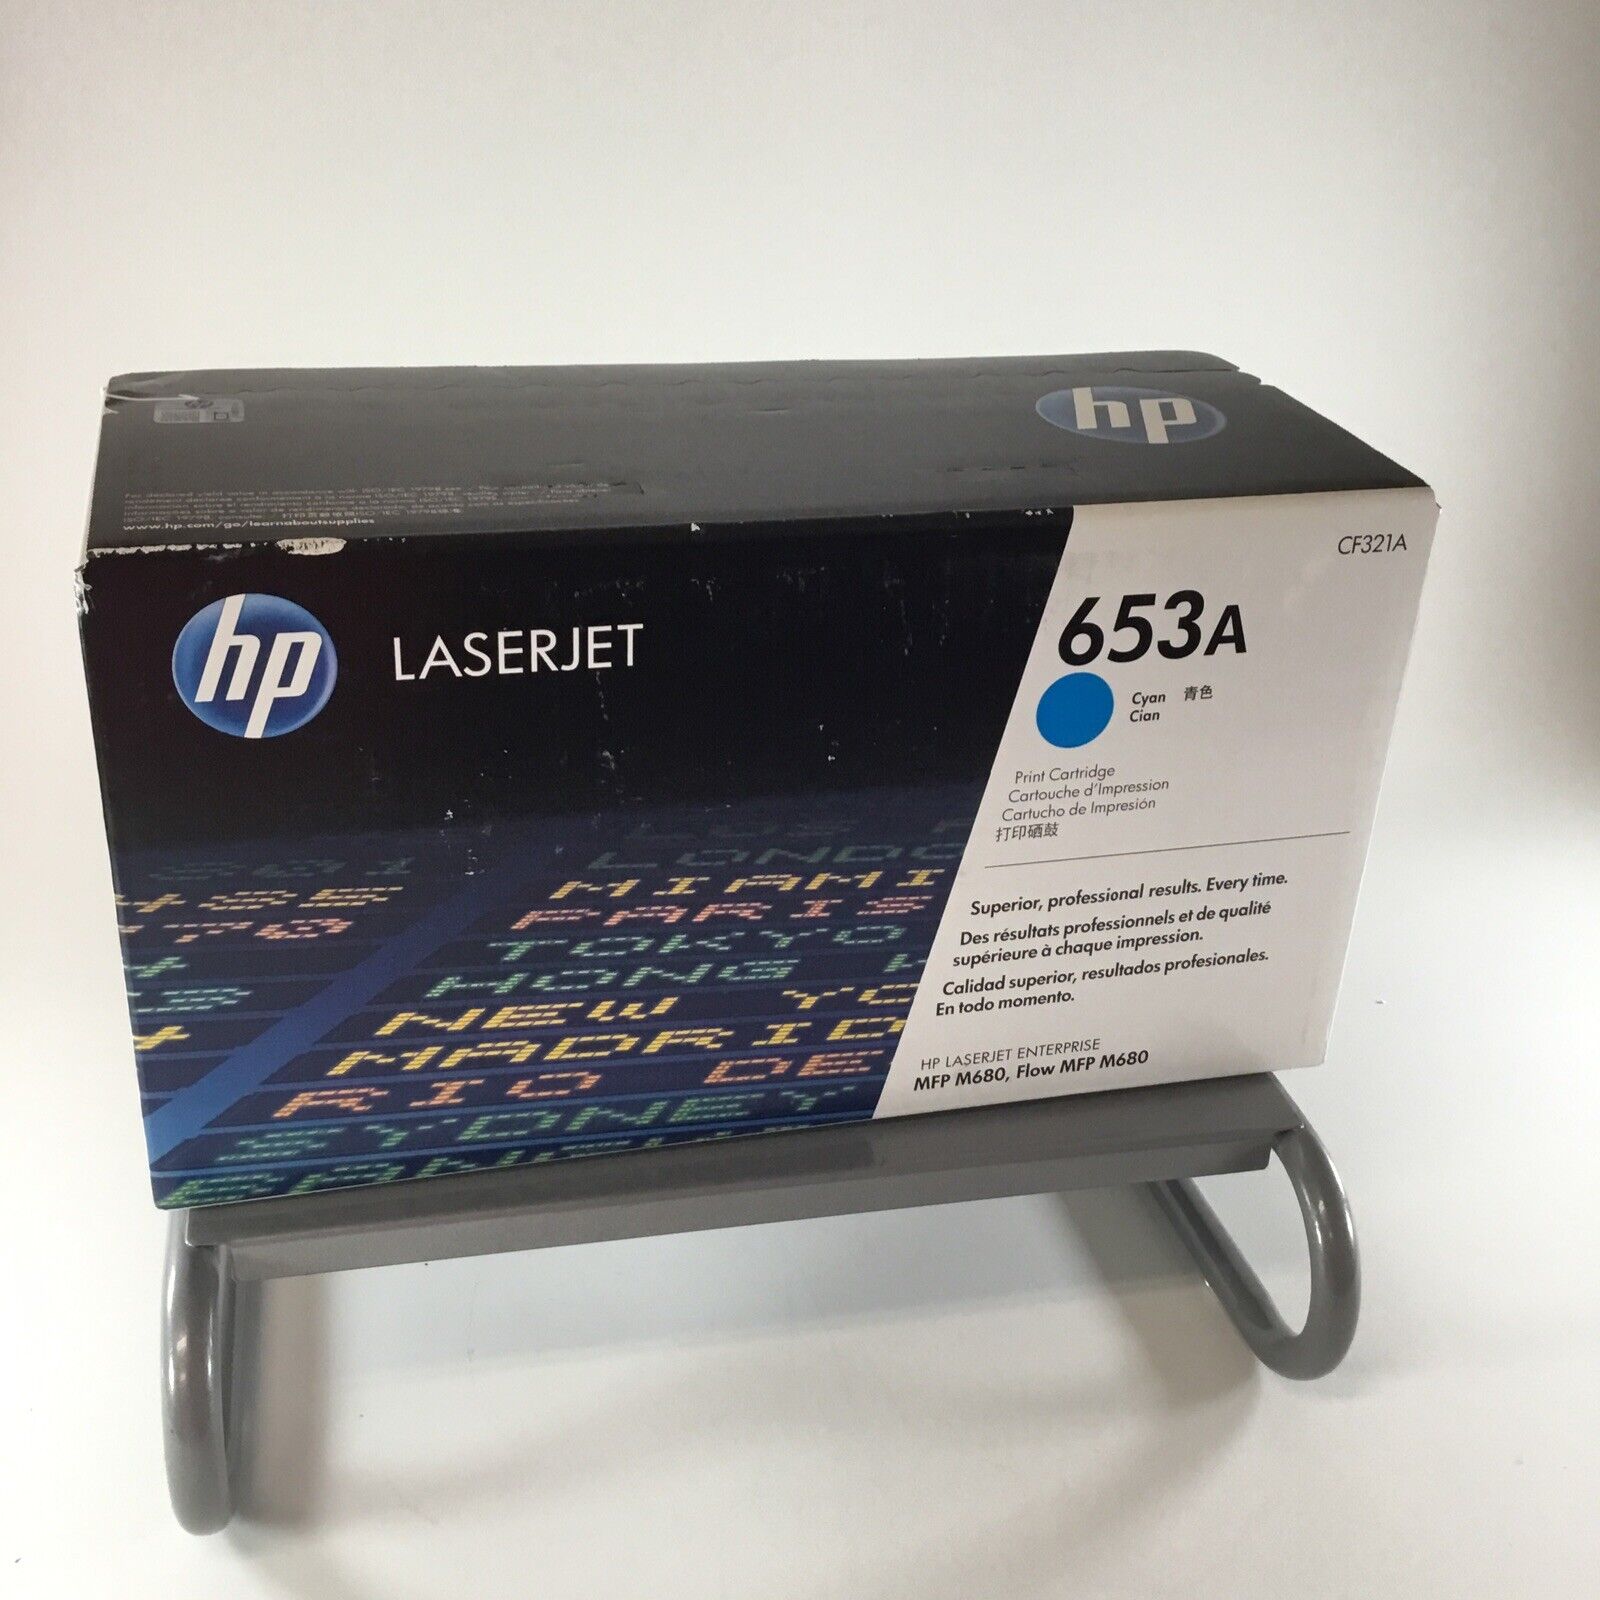 Genuine New Sealed HP 653A Cyan Printer Toner Cartridge CF321A For HP LaserJet